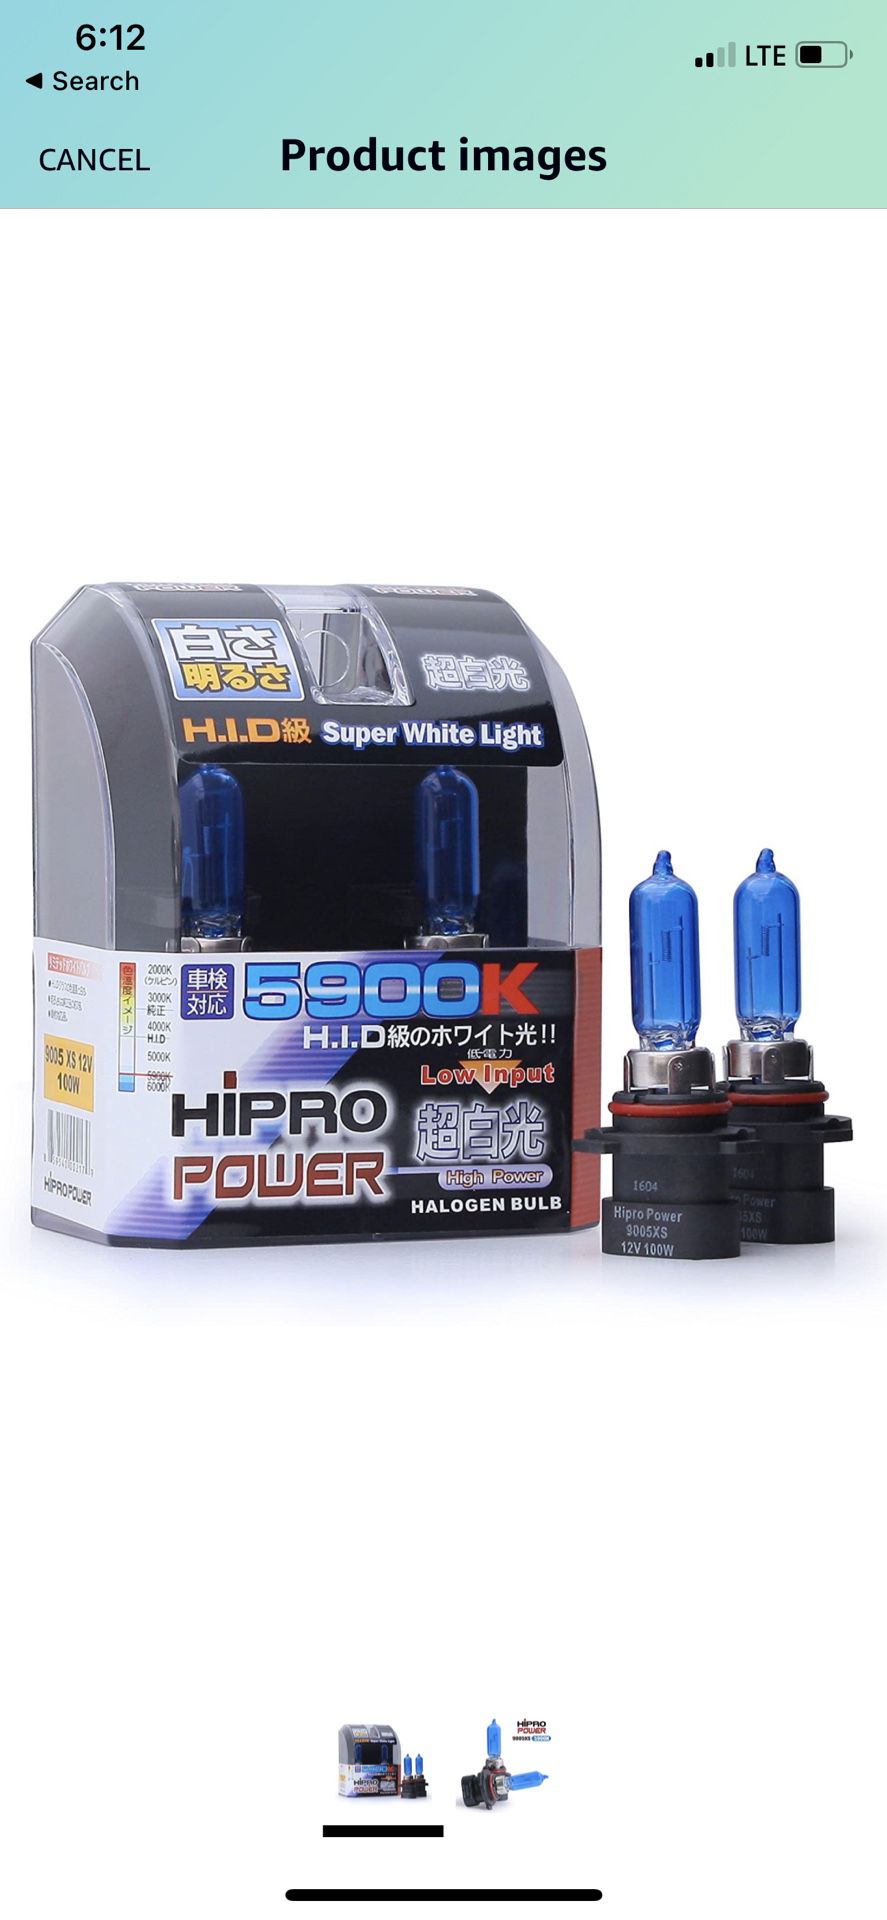 HID lights / Halogen Bulbs 5900k